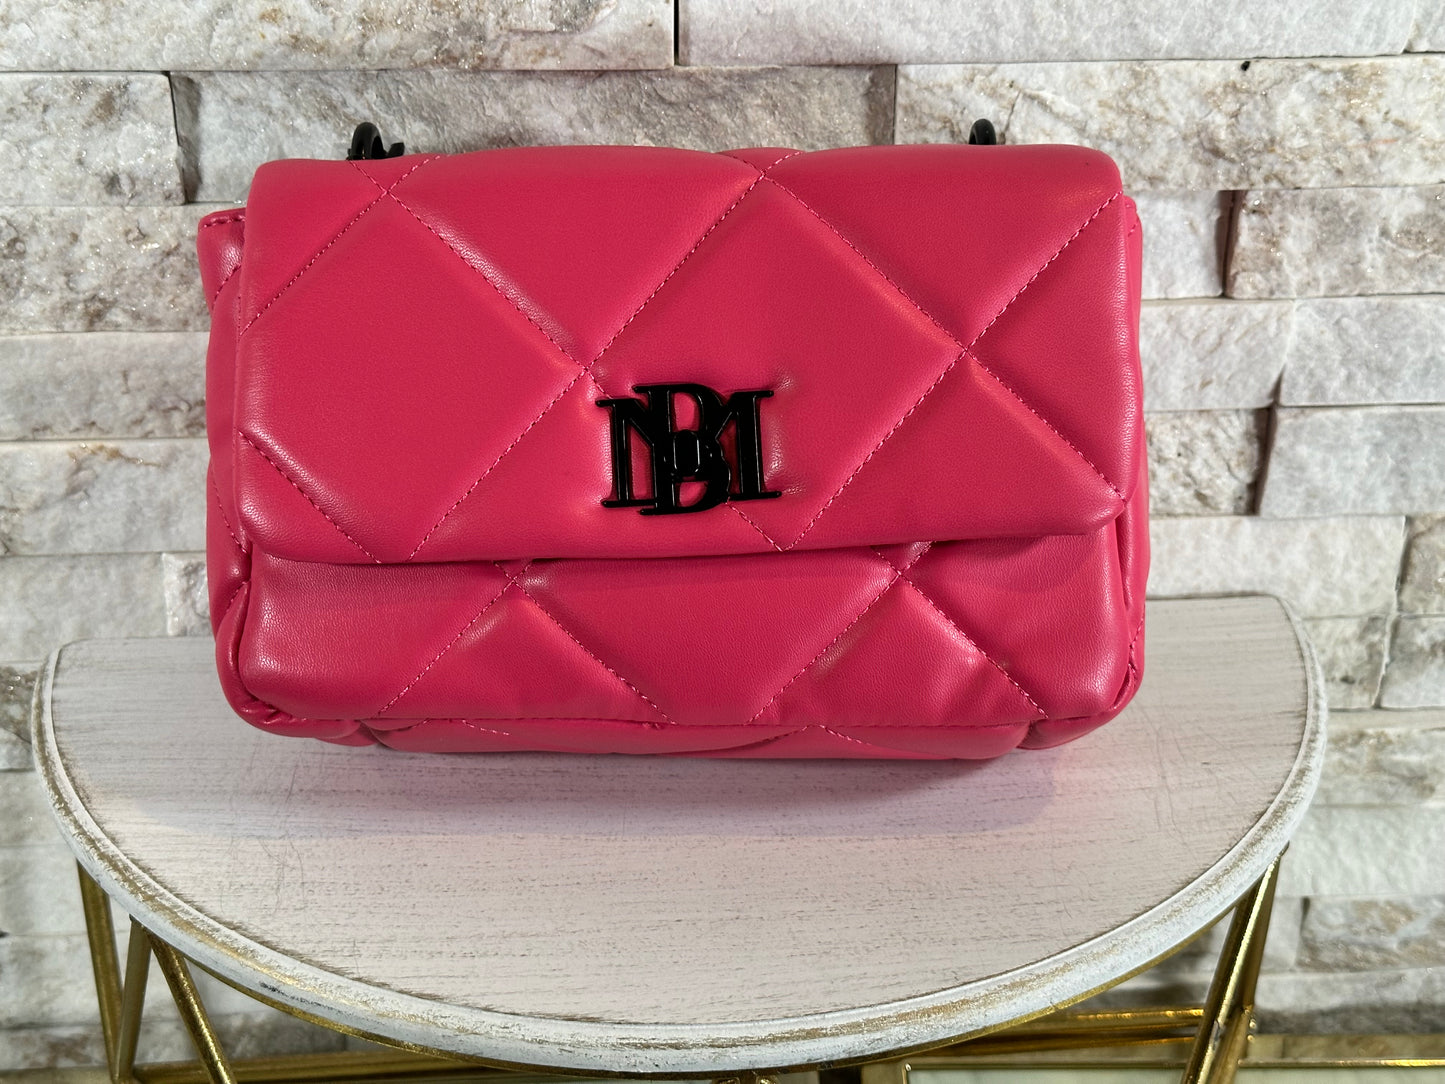 29 BM Hot Pink Bag